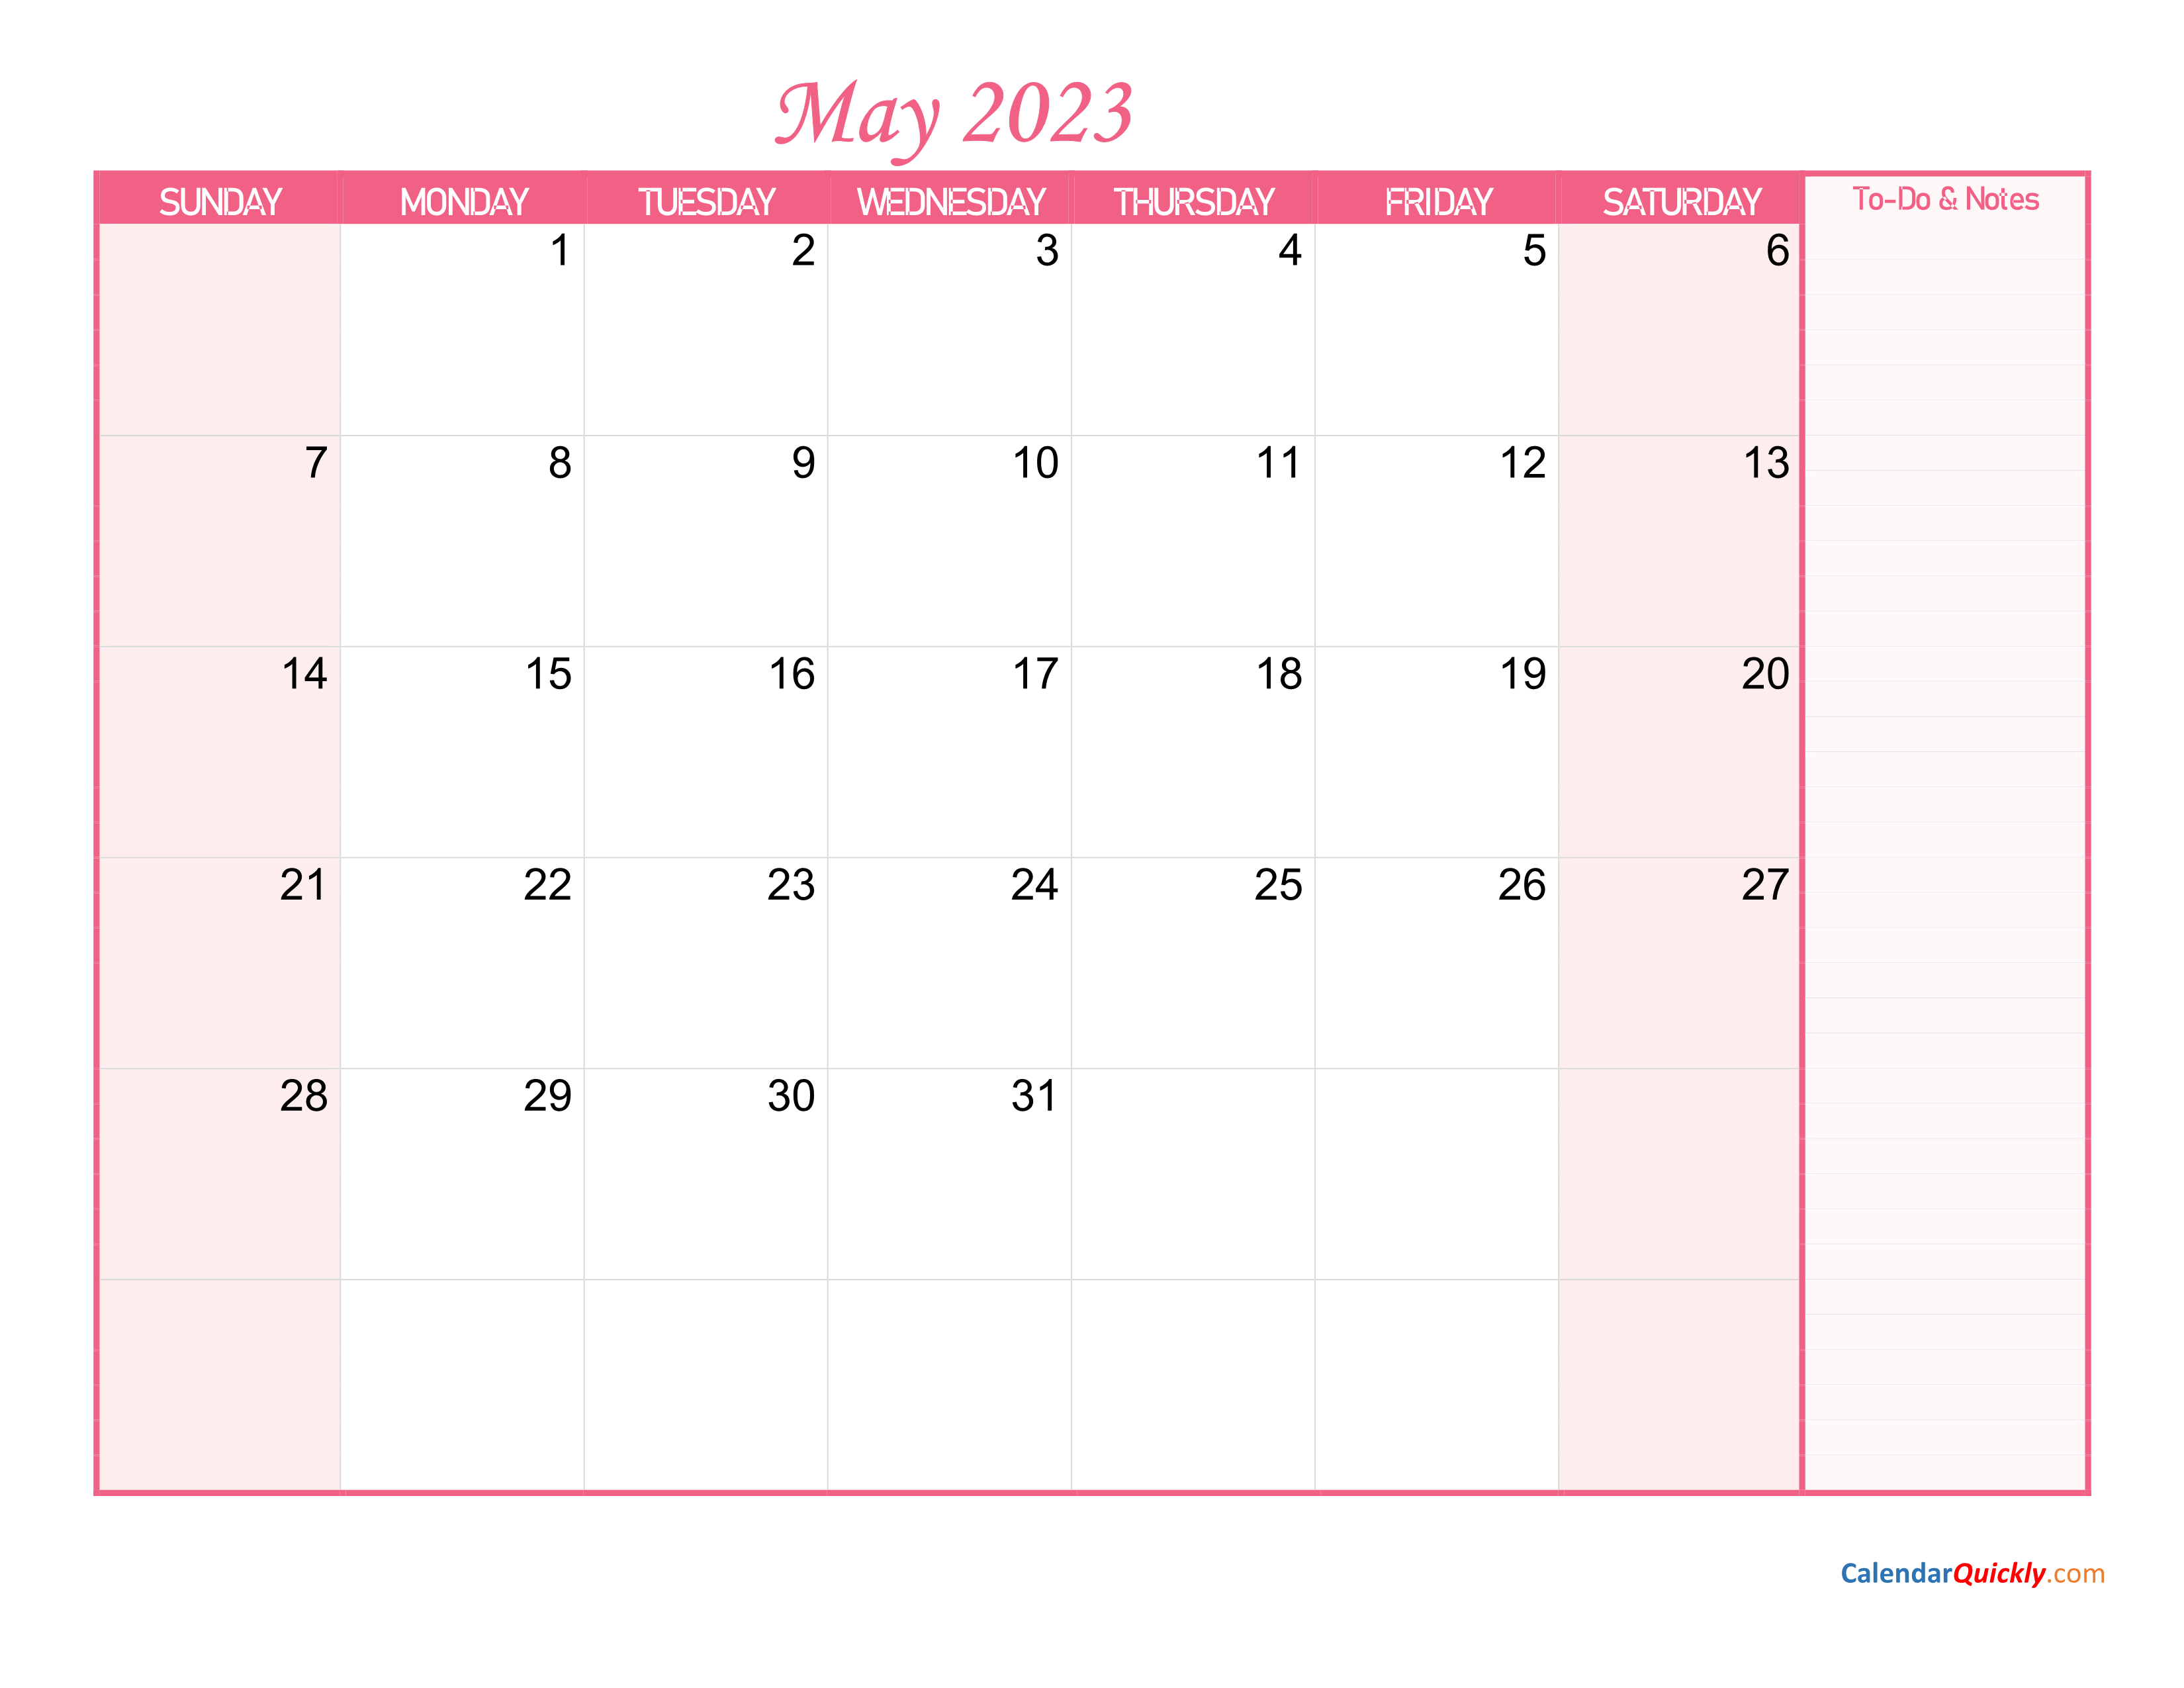 Календарь апрель май 2024 распечатать а4. Календарь на 2022 год февраль месяц. Календарь 2022 с заметками. Календарь ноябрь 2022. План календарь на 2022.